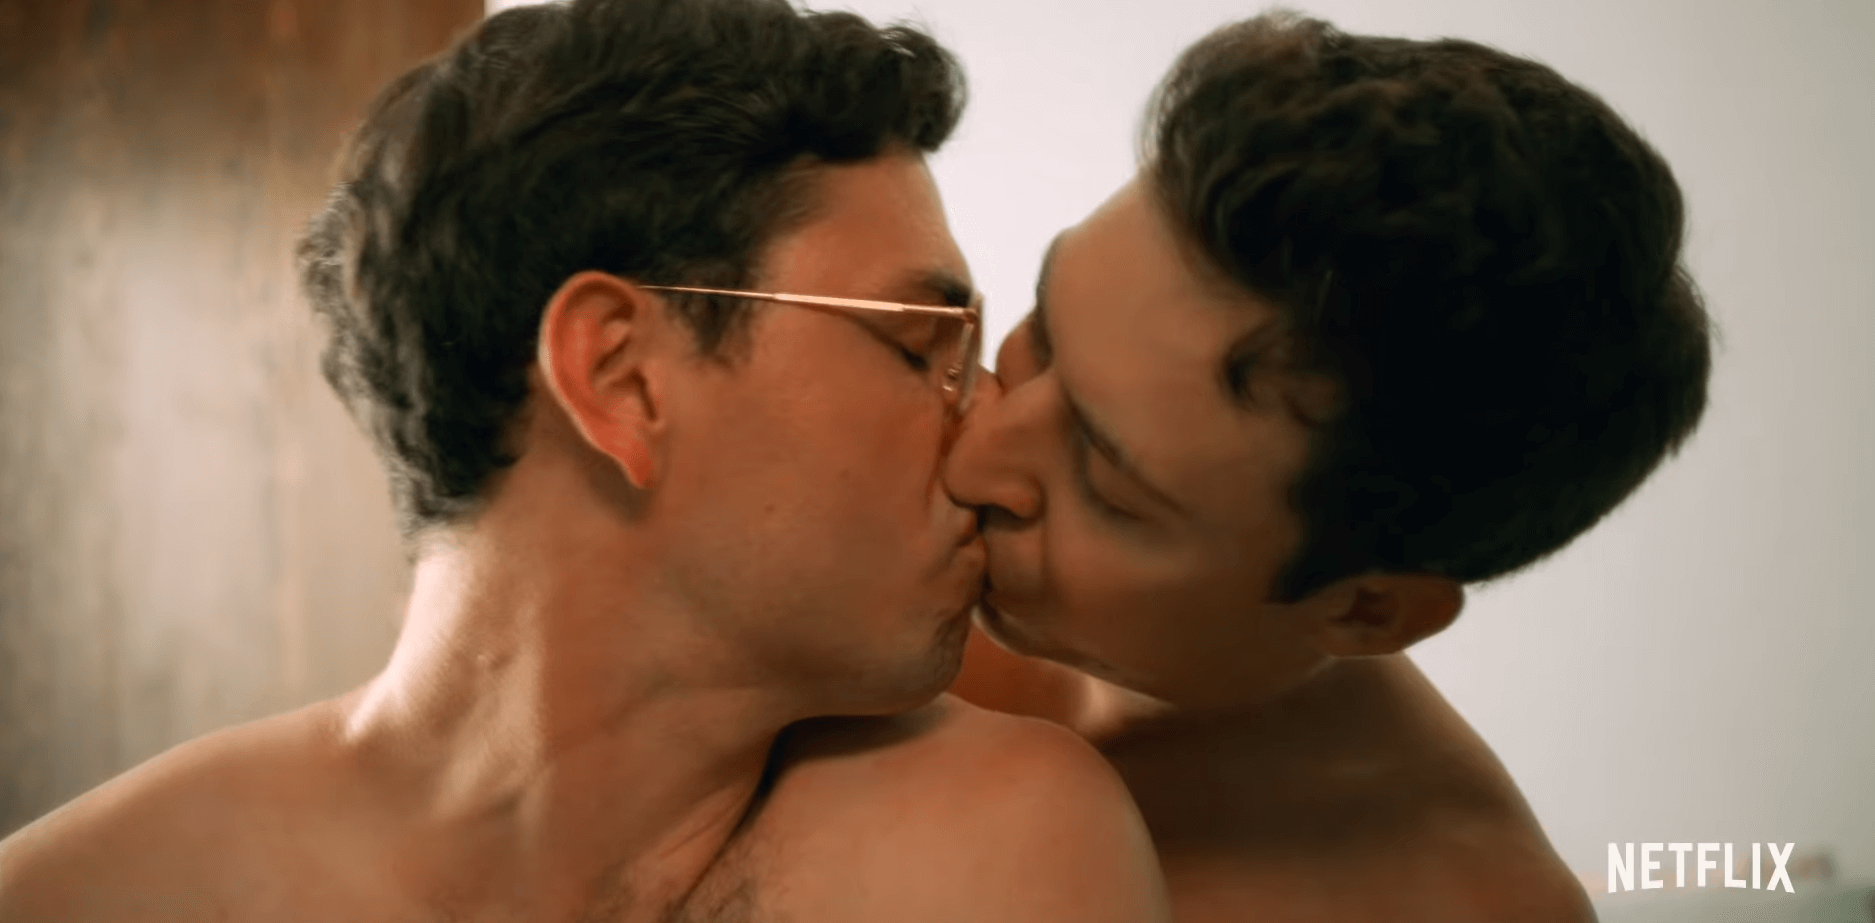 Special, primo trailer della serie Netflix su un omosessuale con lieve paralisi cerebrale - Special - Gay.it